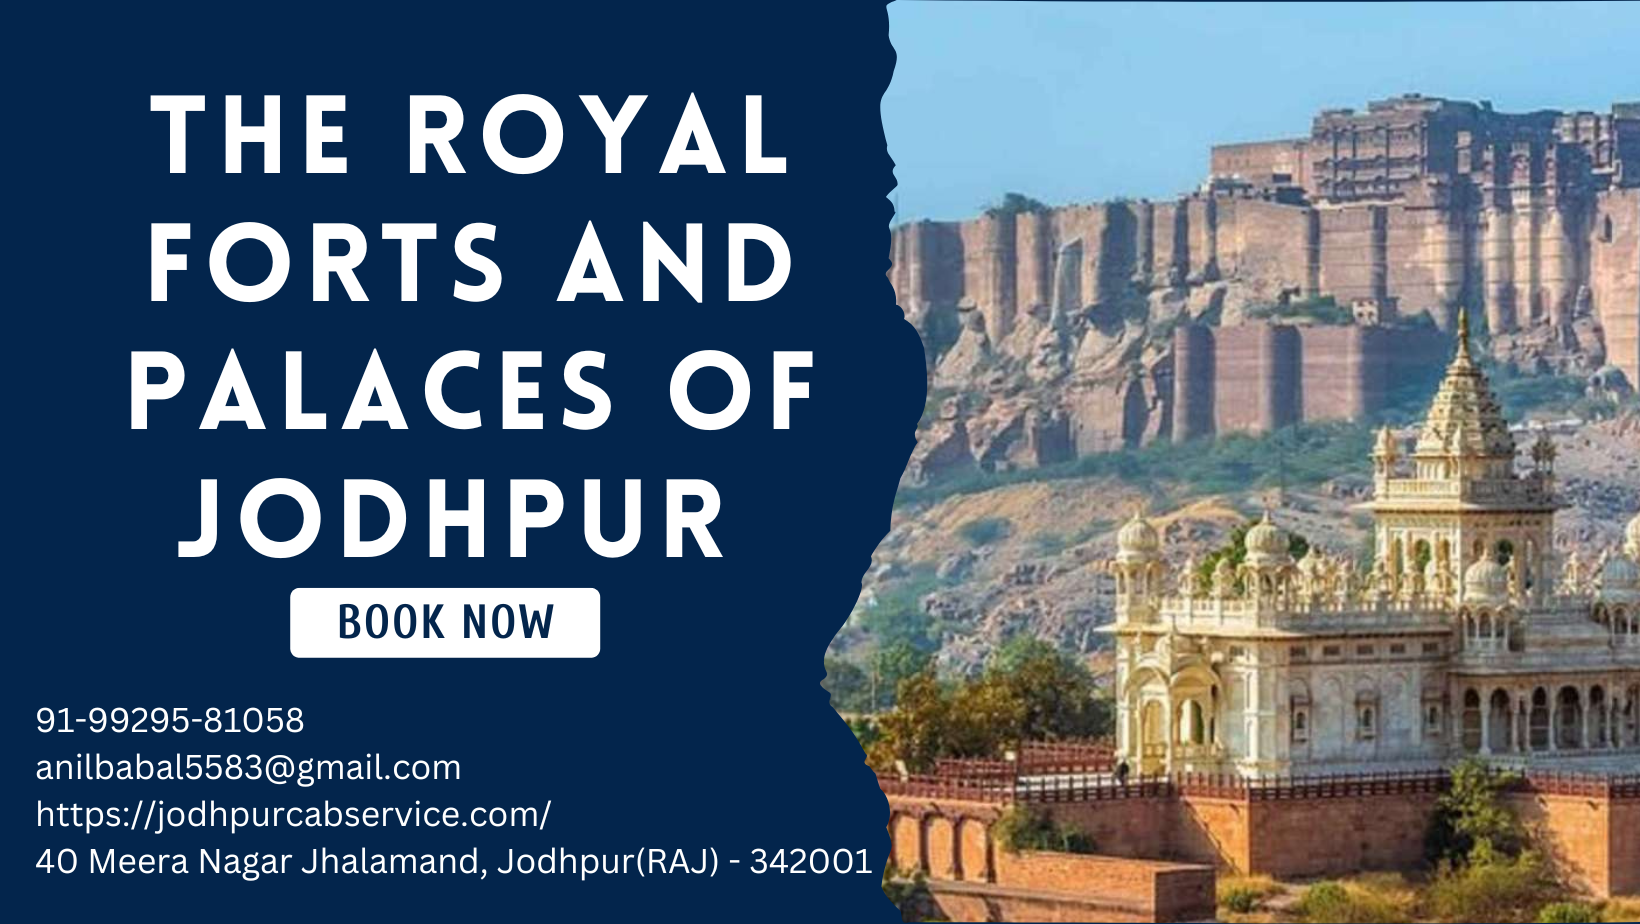 THE ROYAL FORTS AND PALACES OF JODHPUR